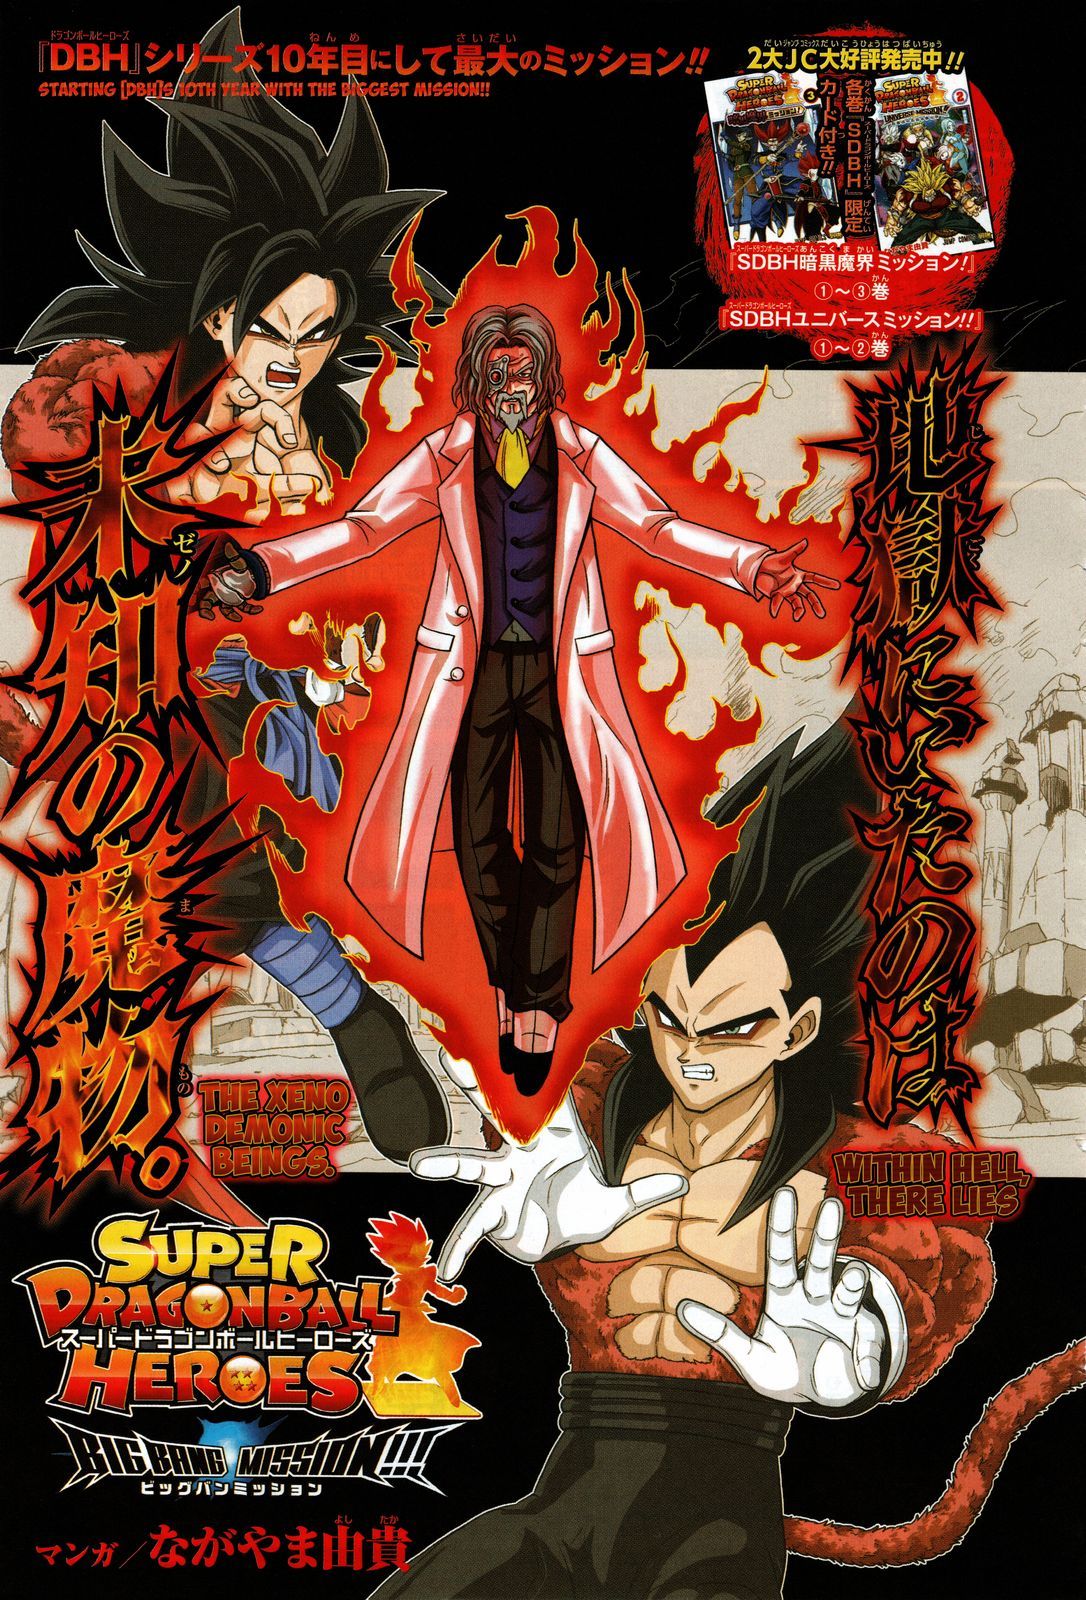 Read Super Dragon Ball Heroes Big Bang Mission Manga English New Chapters Online Free Mangaclash